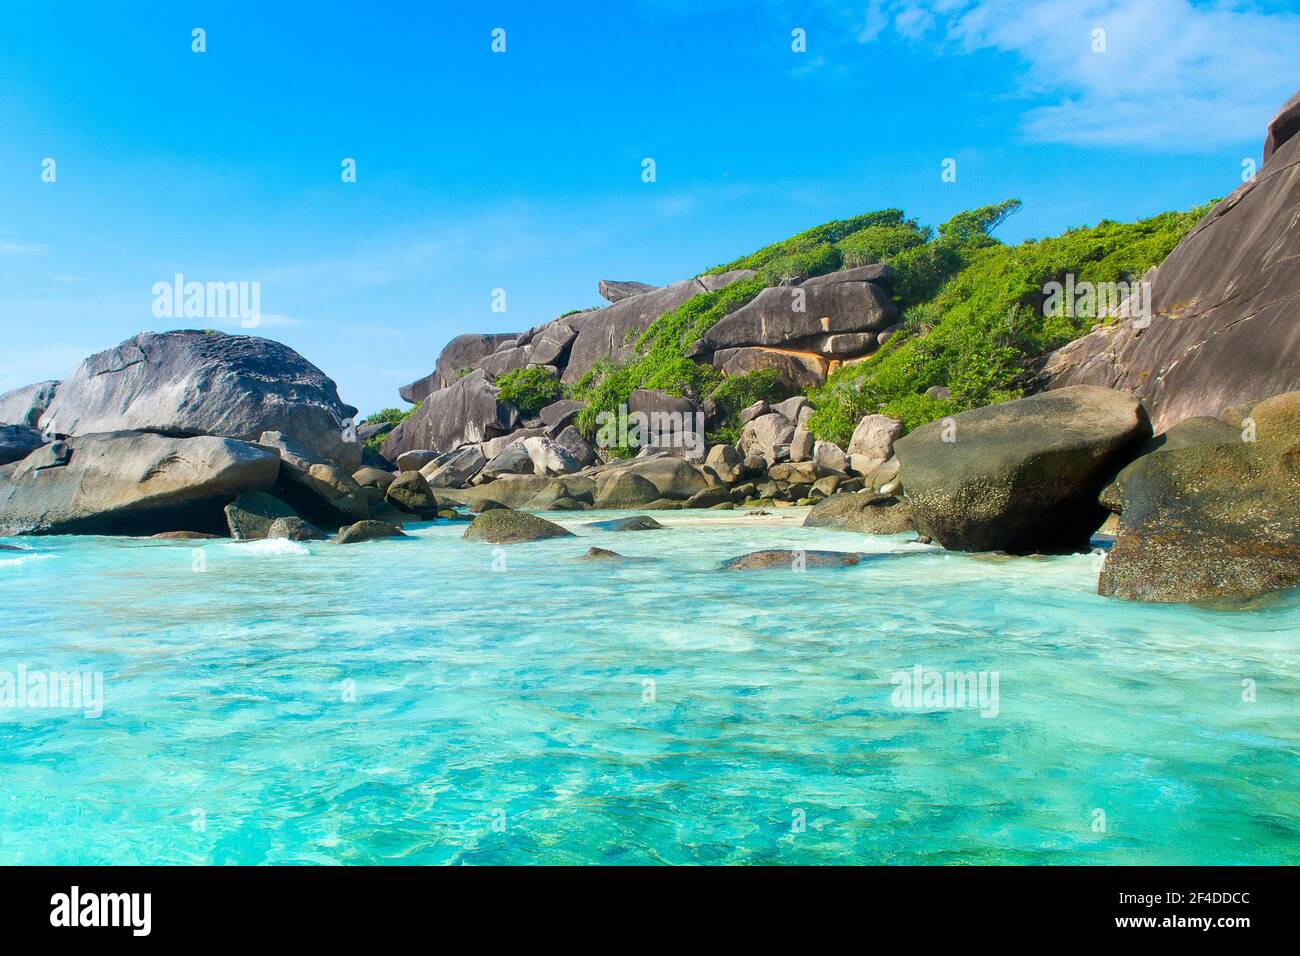 Felsen im weißen Sandstrand - Koh Similan Insel, Andamanensee, Thailand Stockfoto